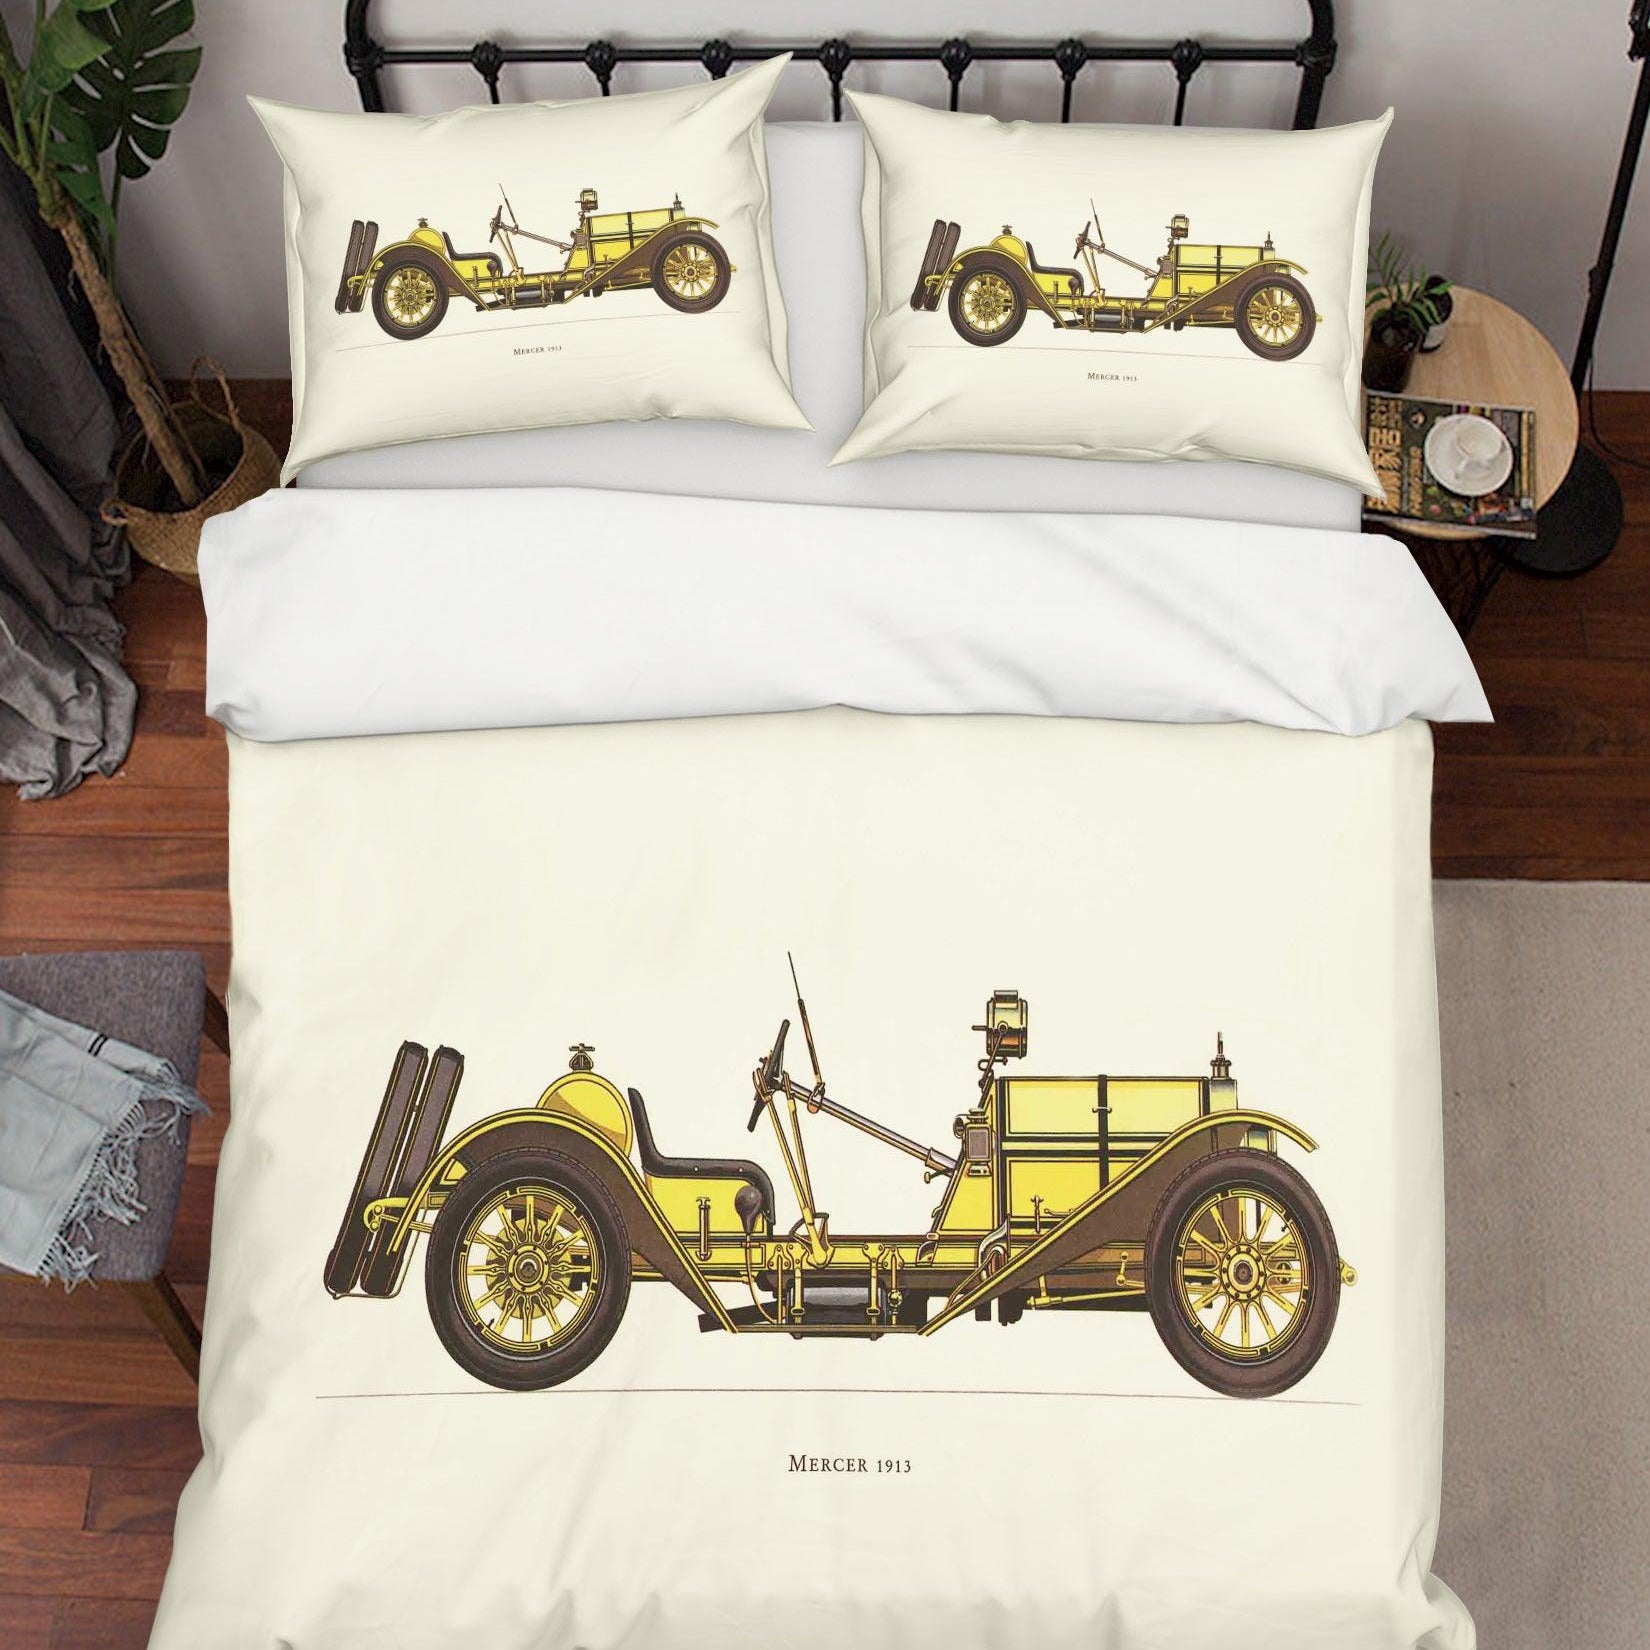 3D Yellow Retro Cars Quilt Cover Set Bedding Set Pillowcases 14- Jess Art Decoration